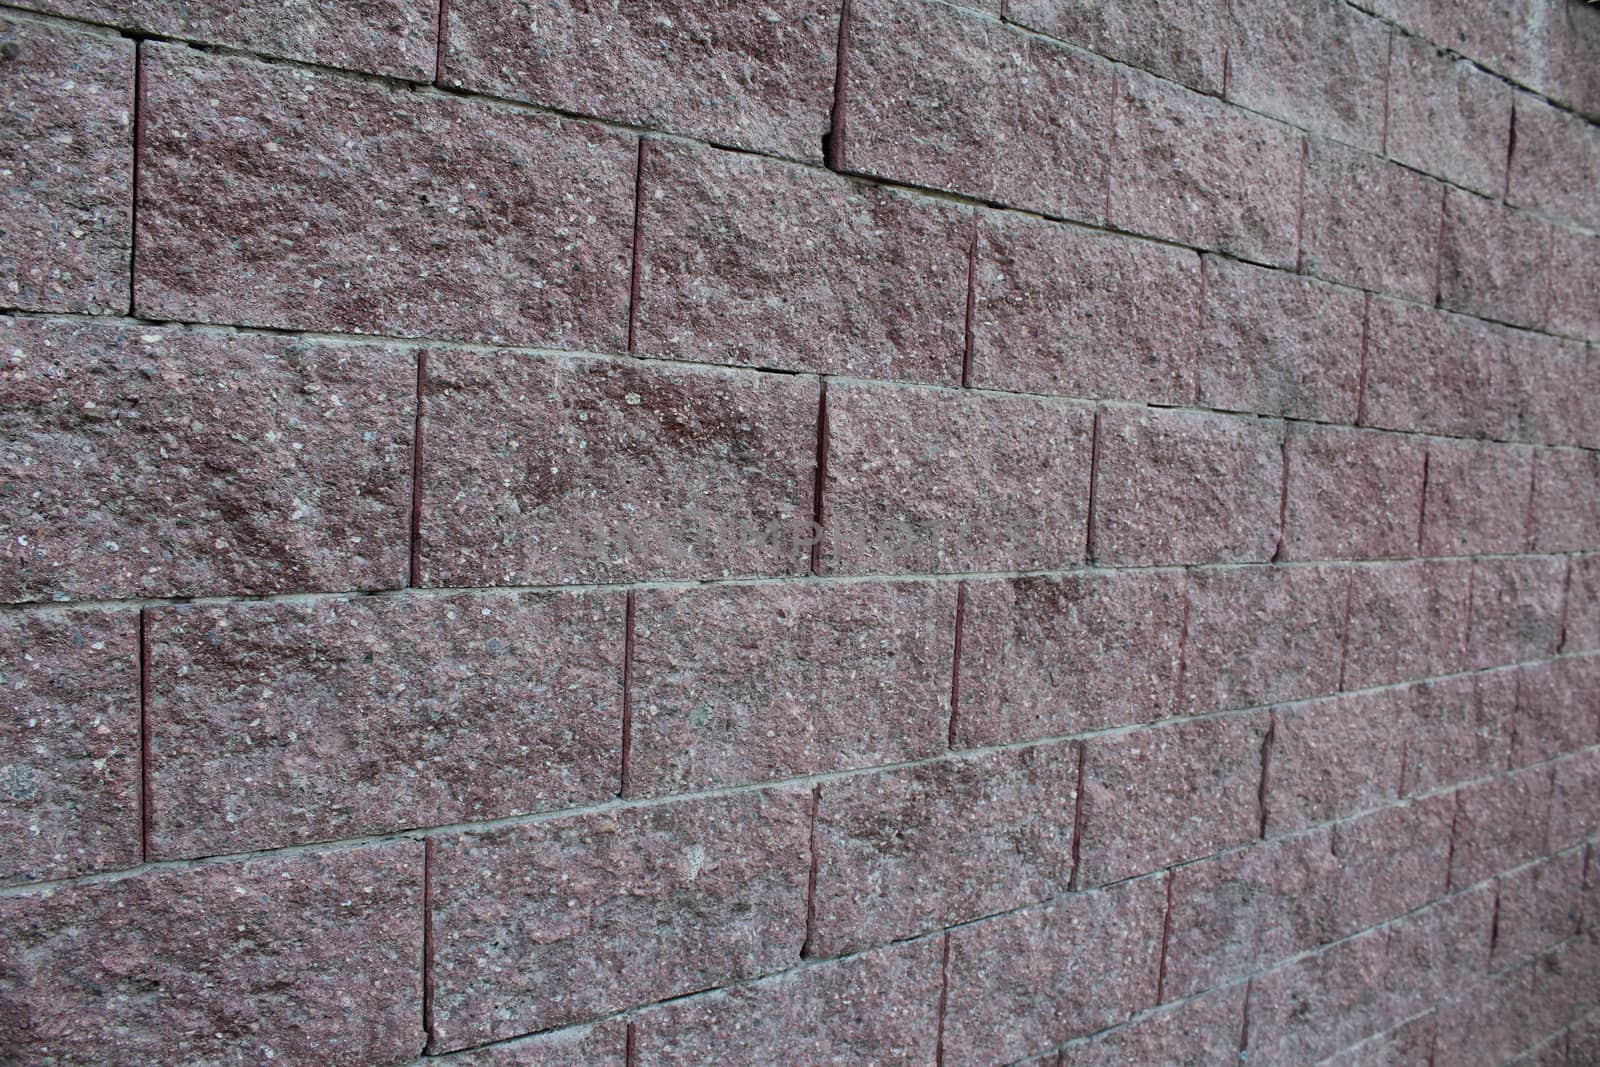 Brick wall background texture by nurjan100